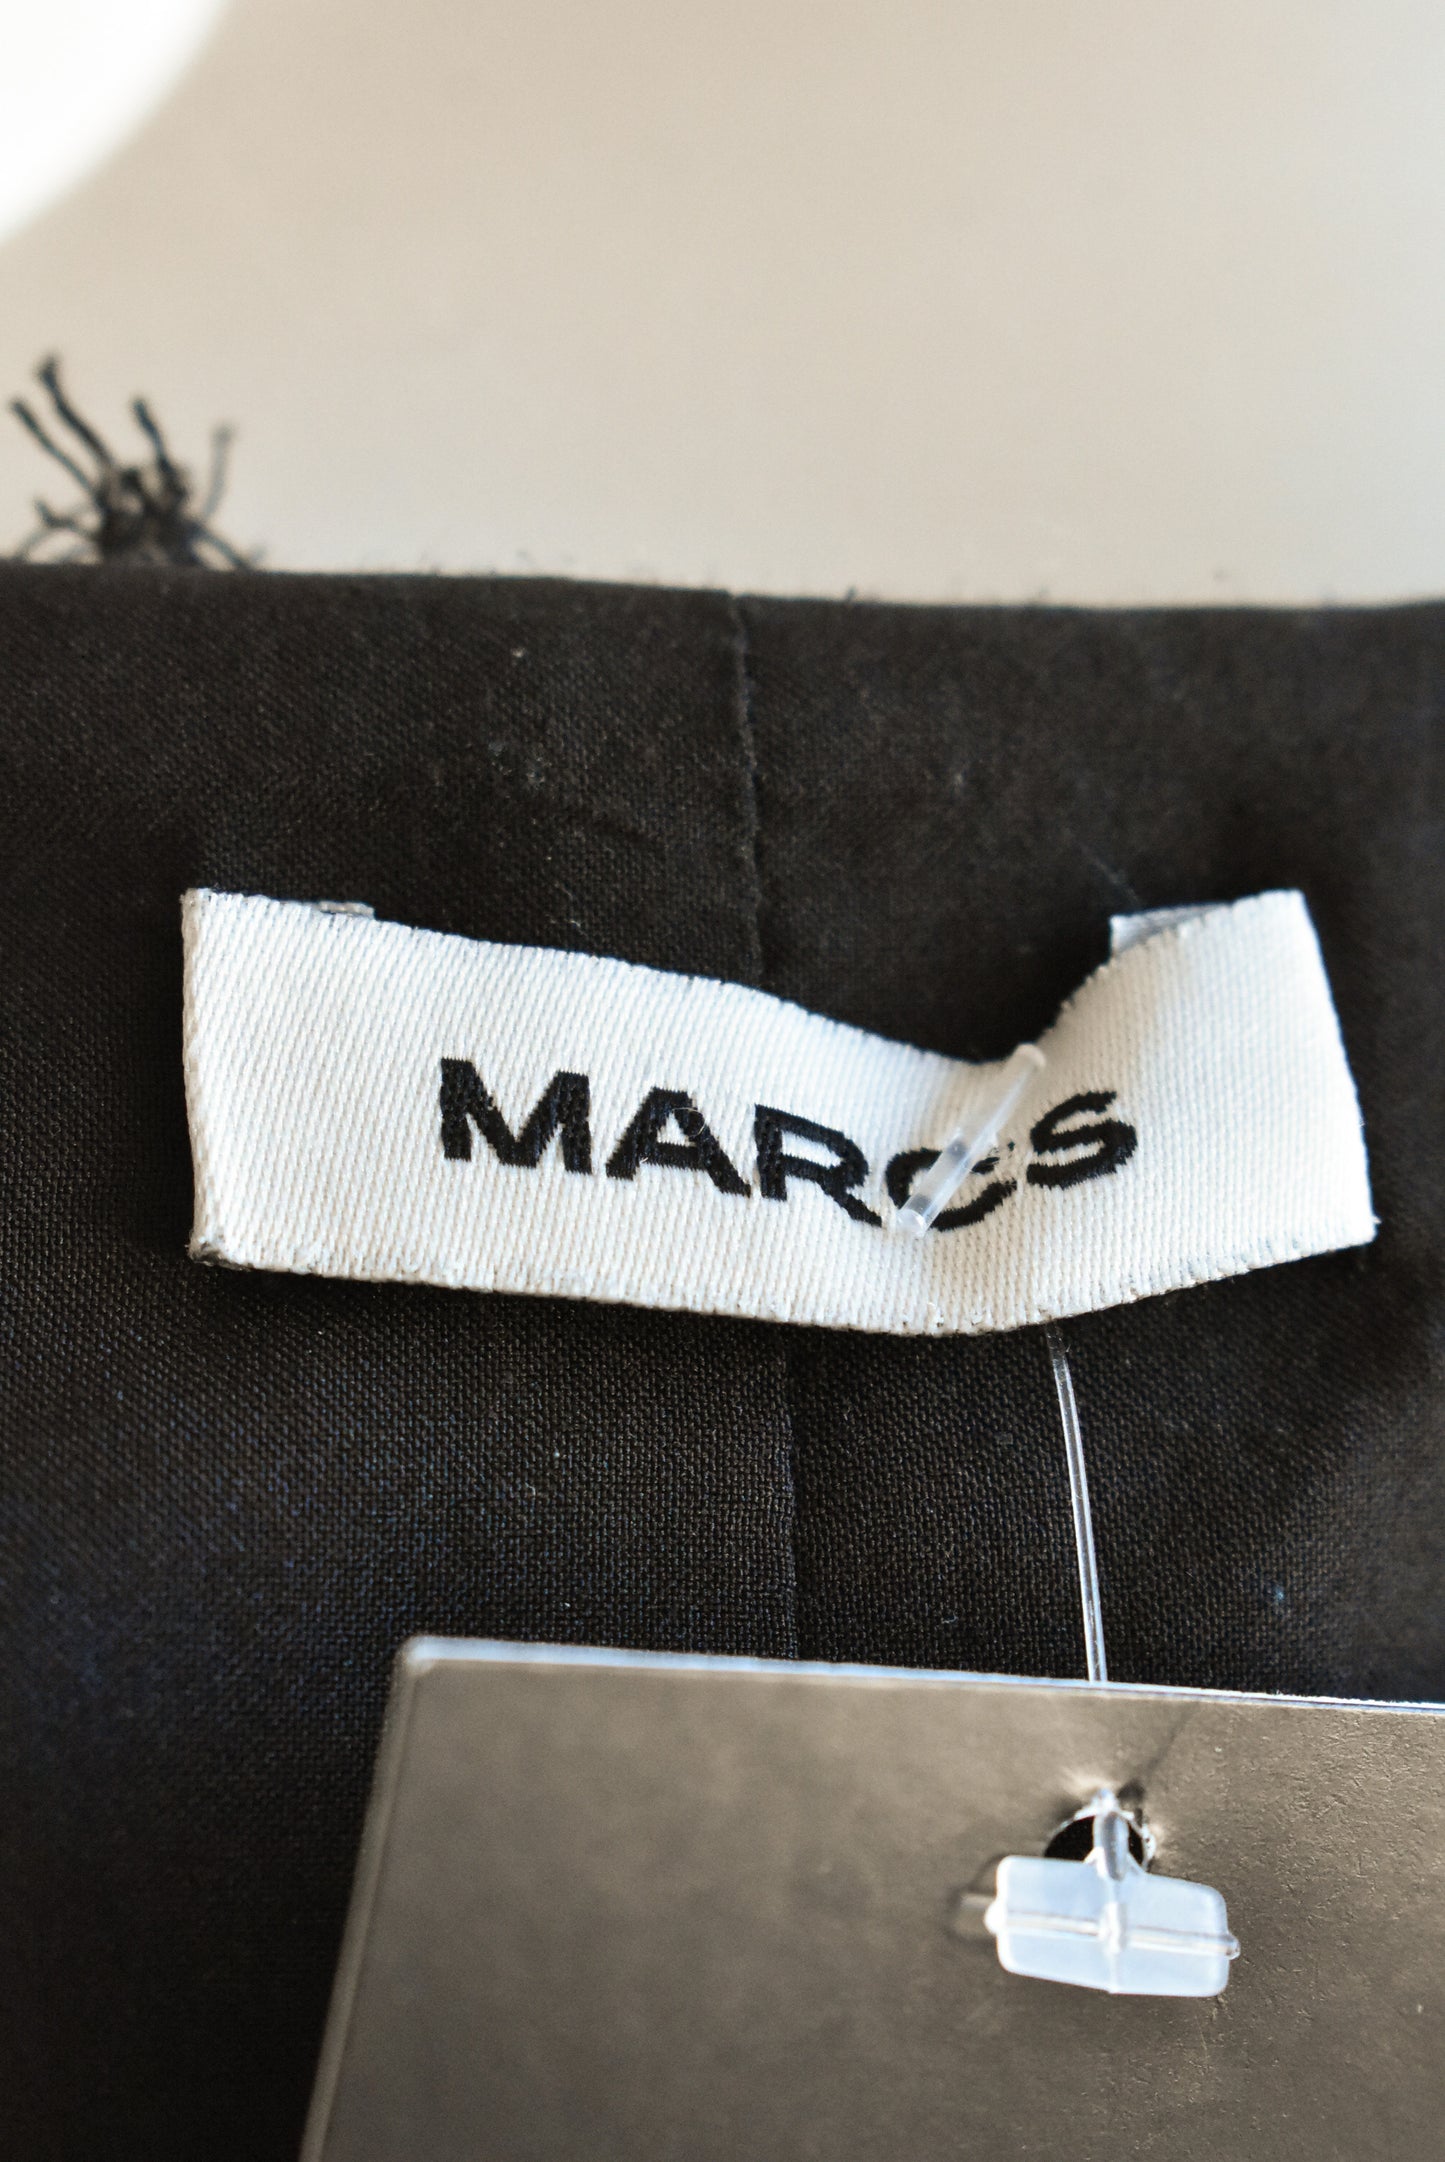 Marcs woven fabric dress, 14